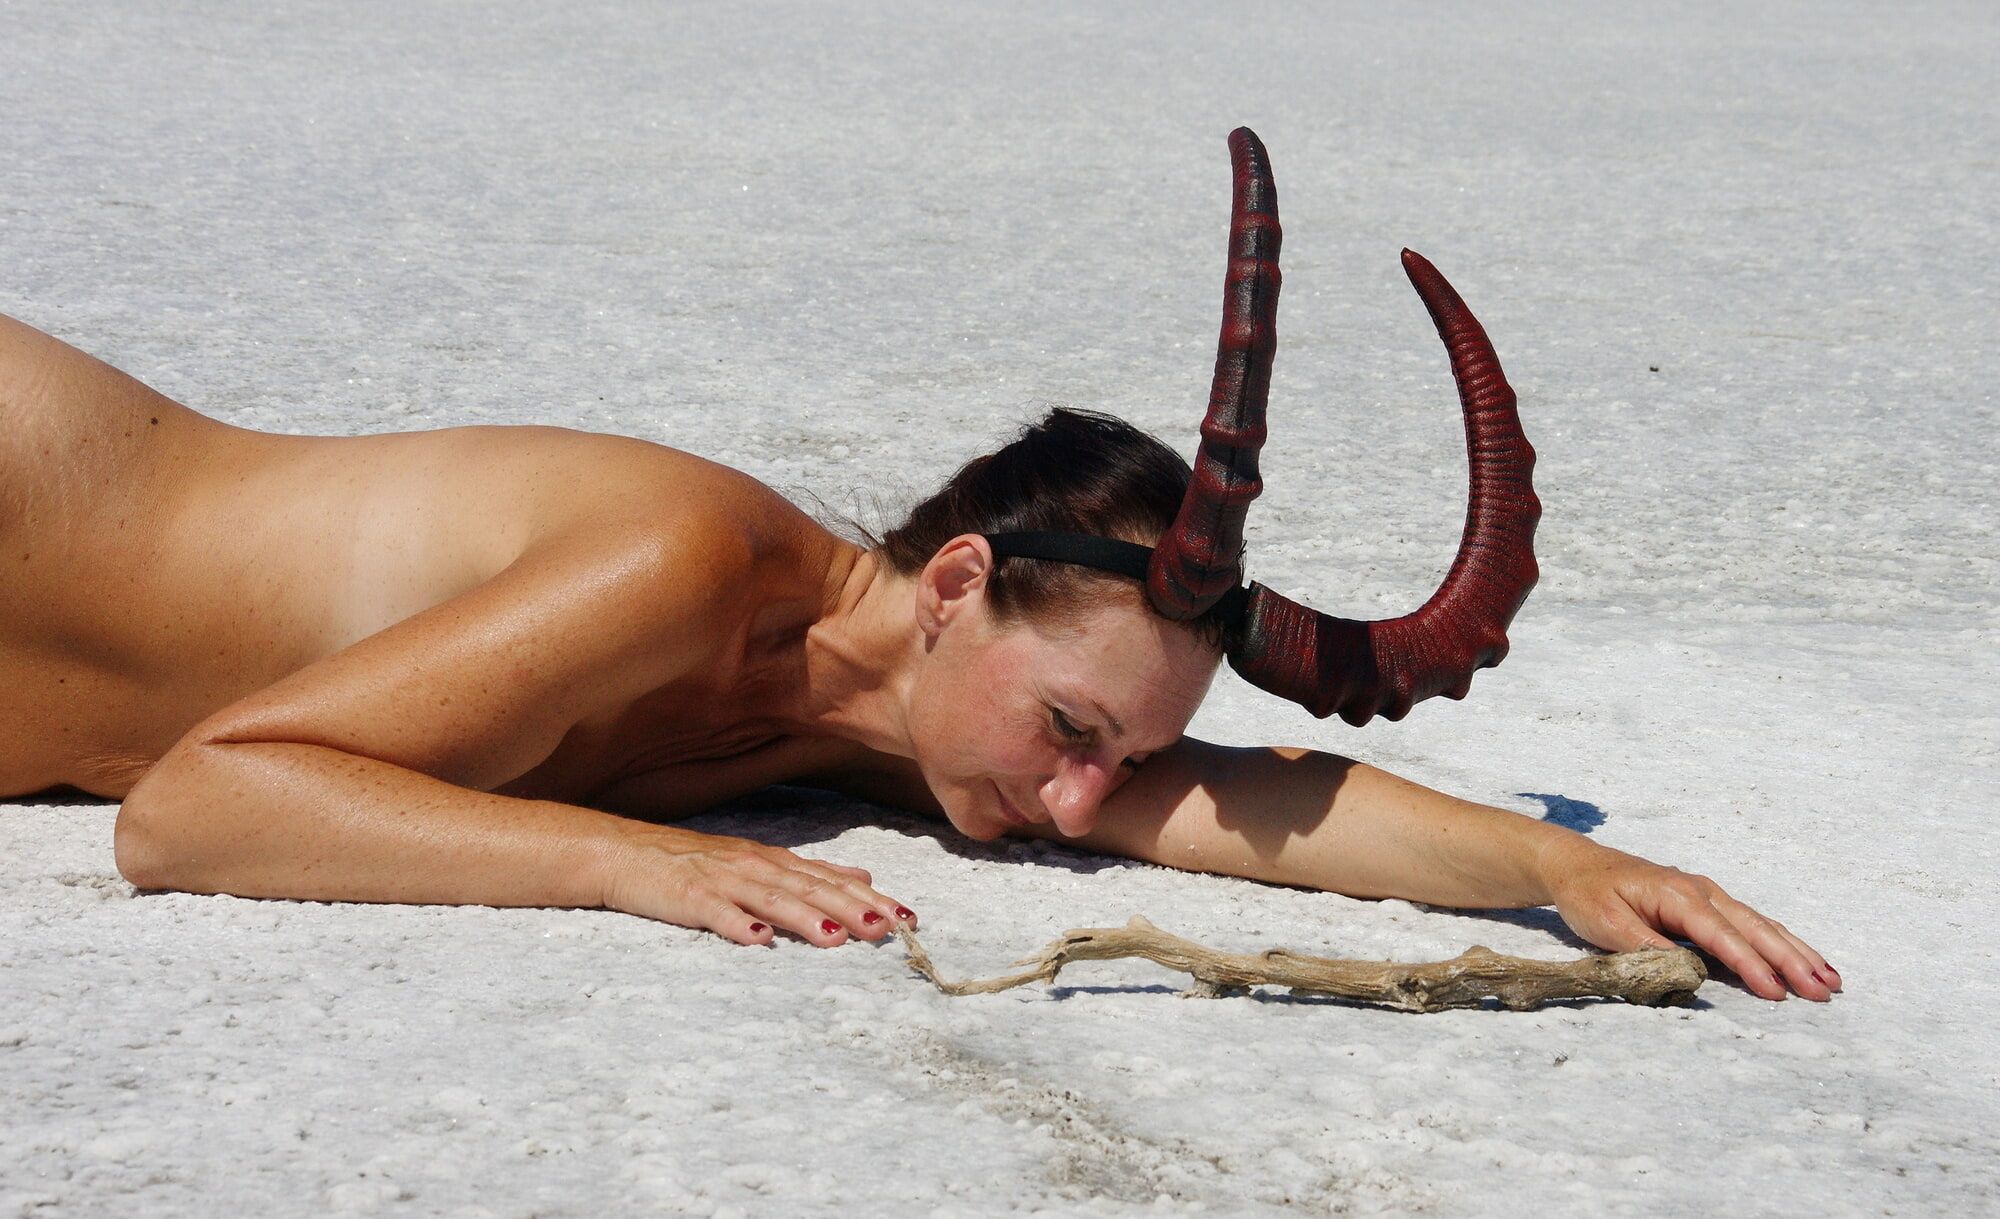 crawling on a salt lake #5